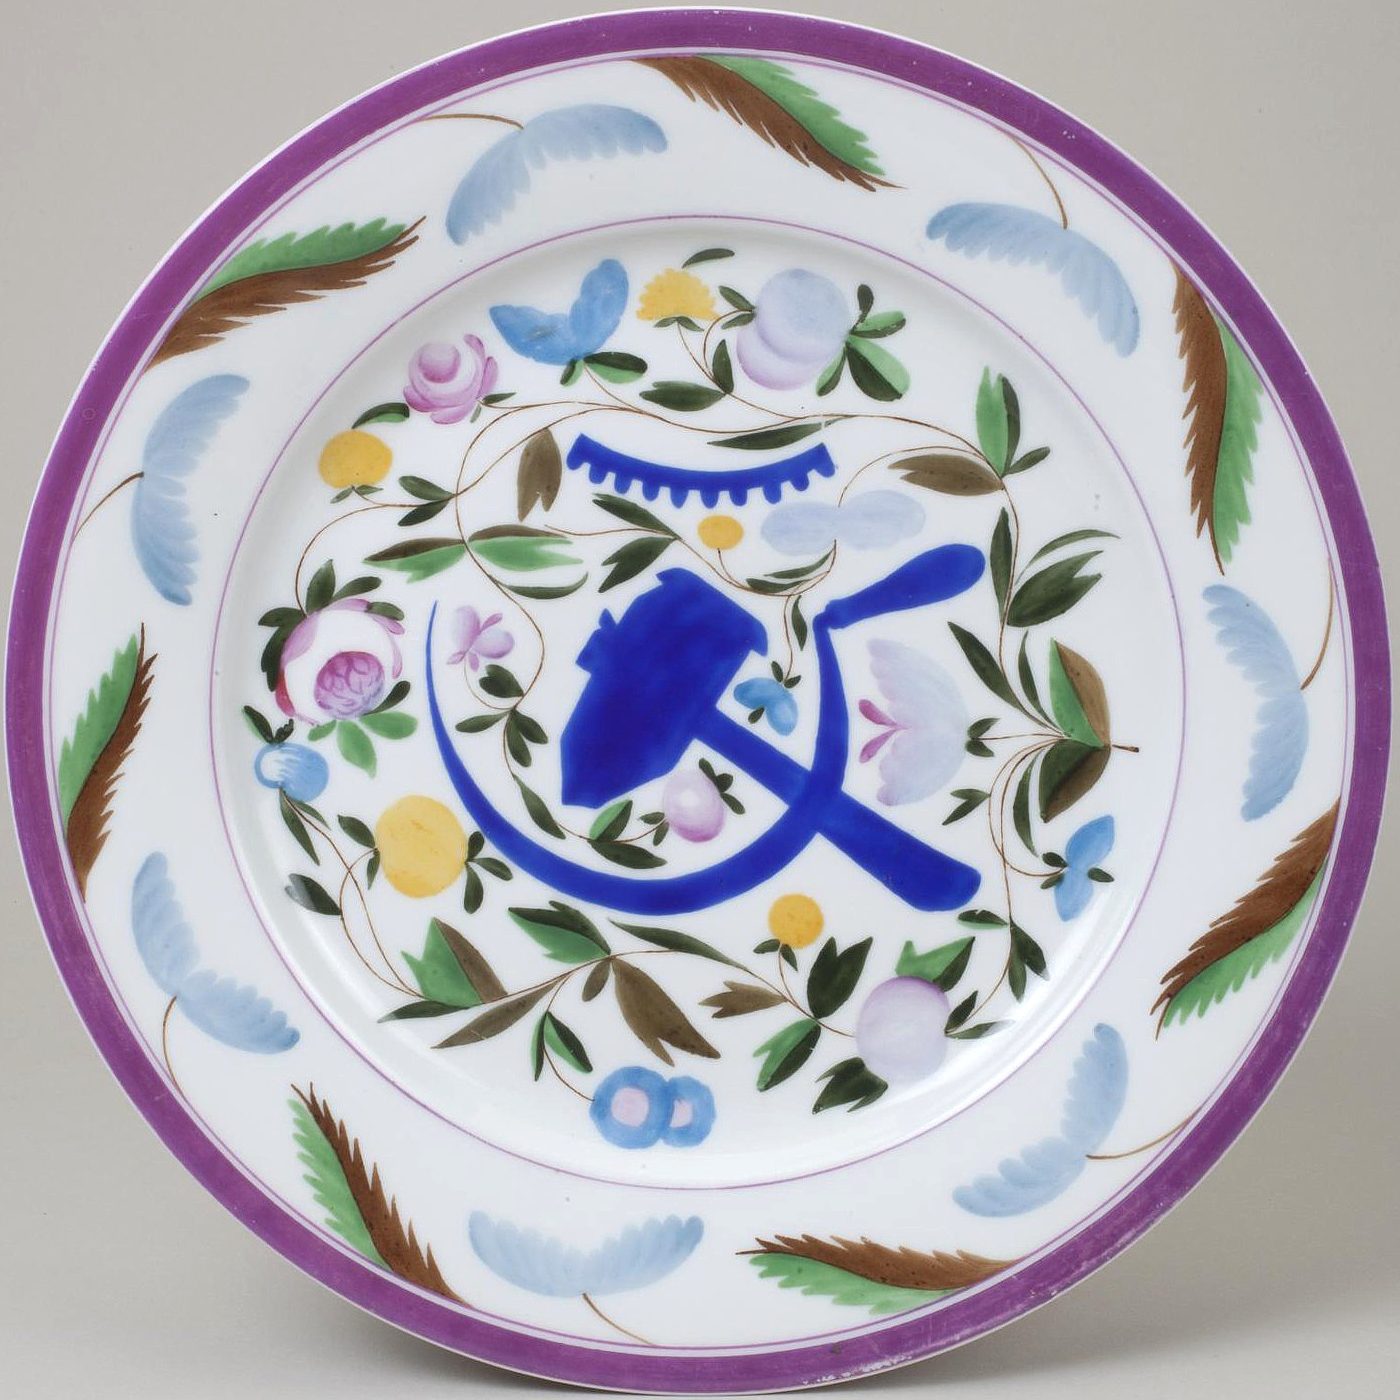 Soviet propaganda porcelain plate "Blue Sickle"after Sergei Chekhonin. State Porcelain Factory